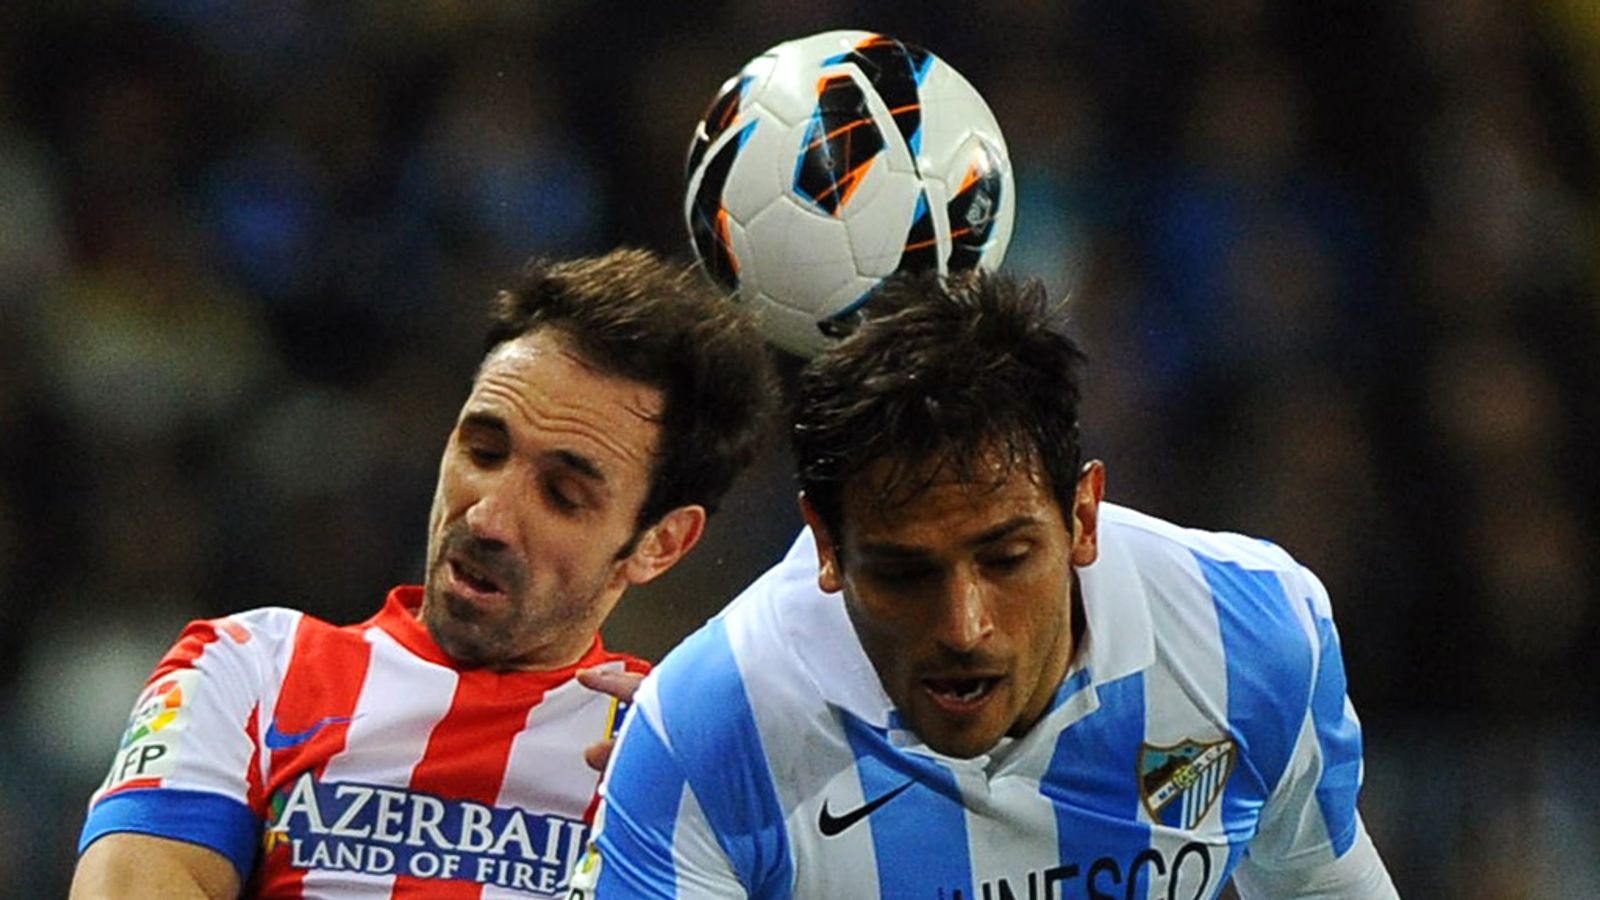 Roque Santa Cruz completes £17m move to Manchester City, Manchester City